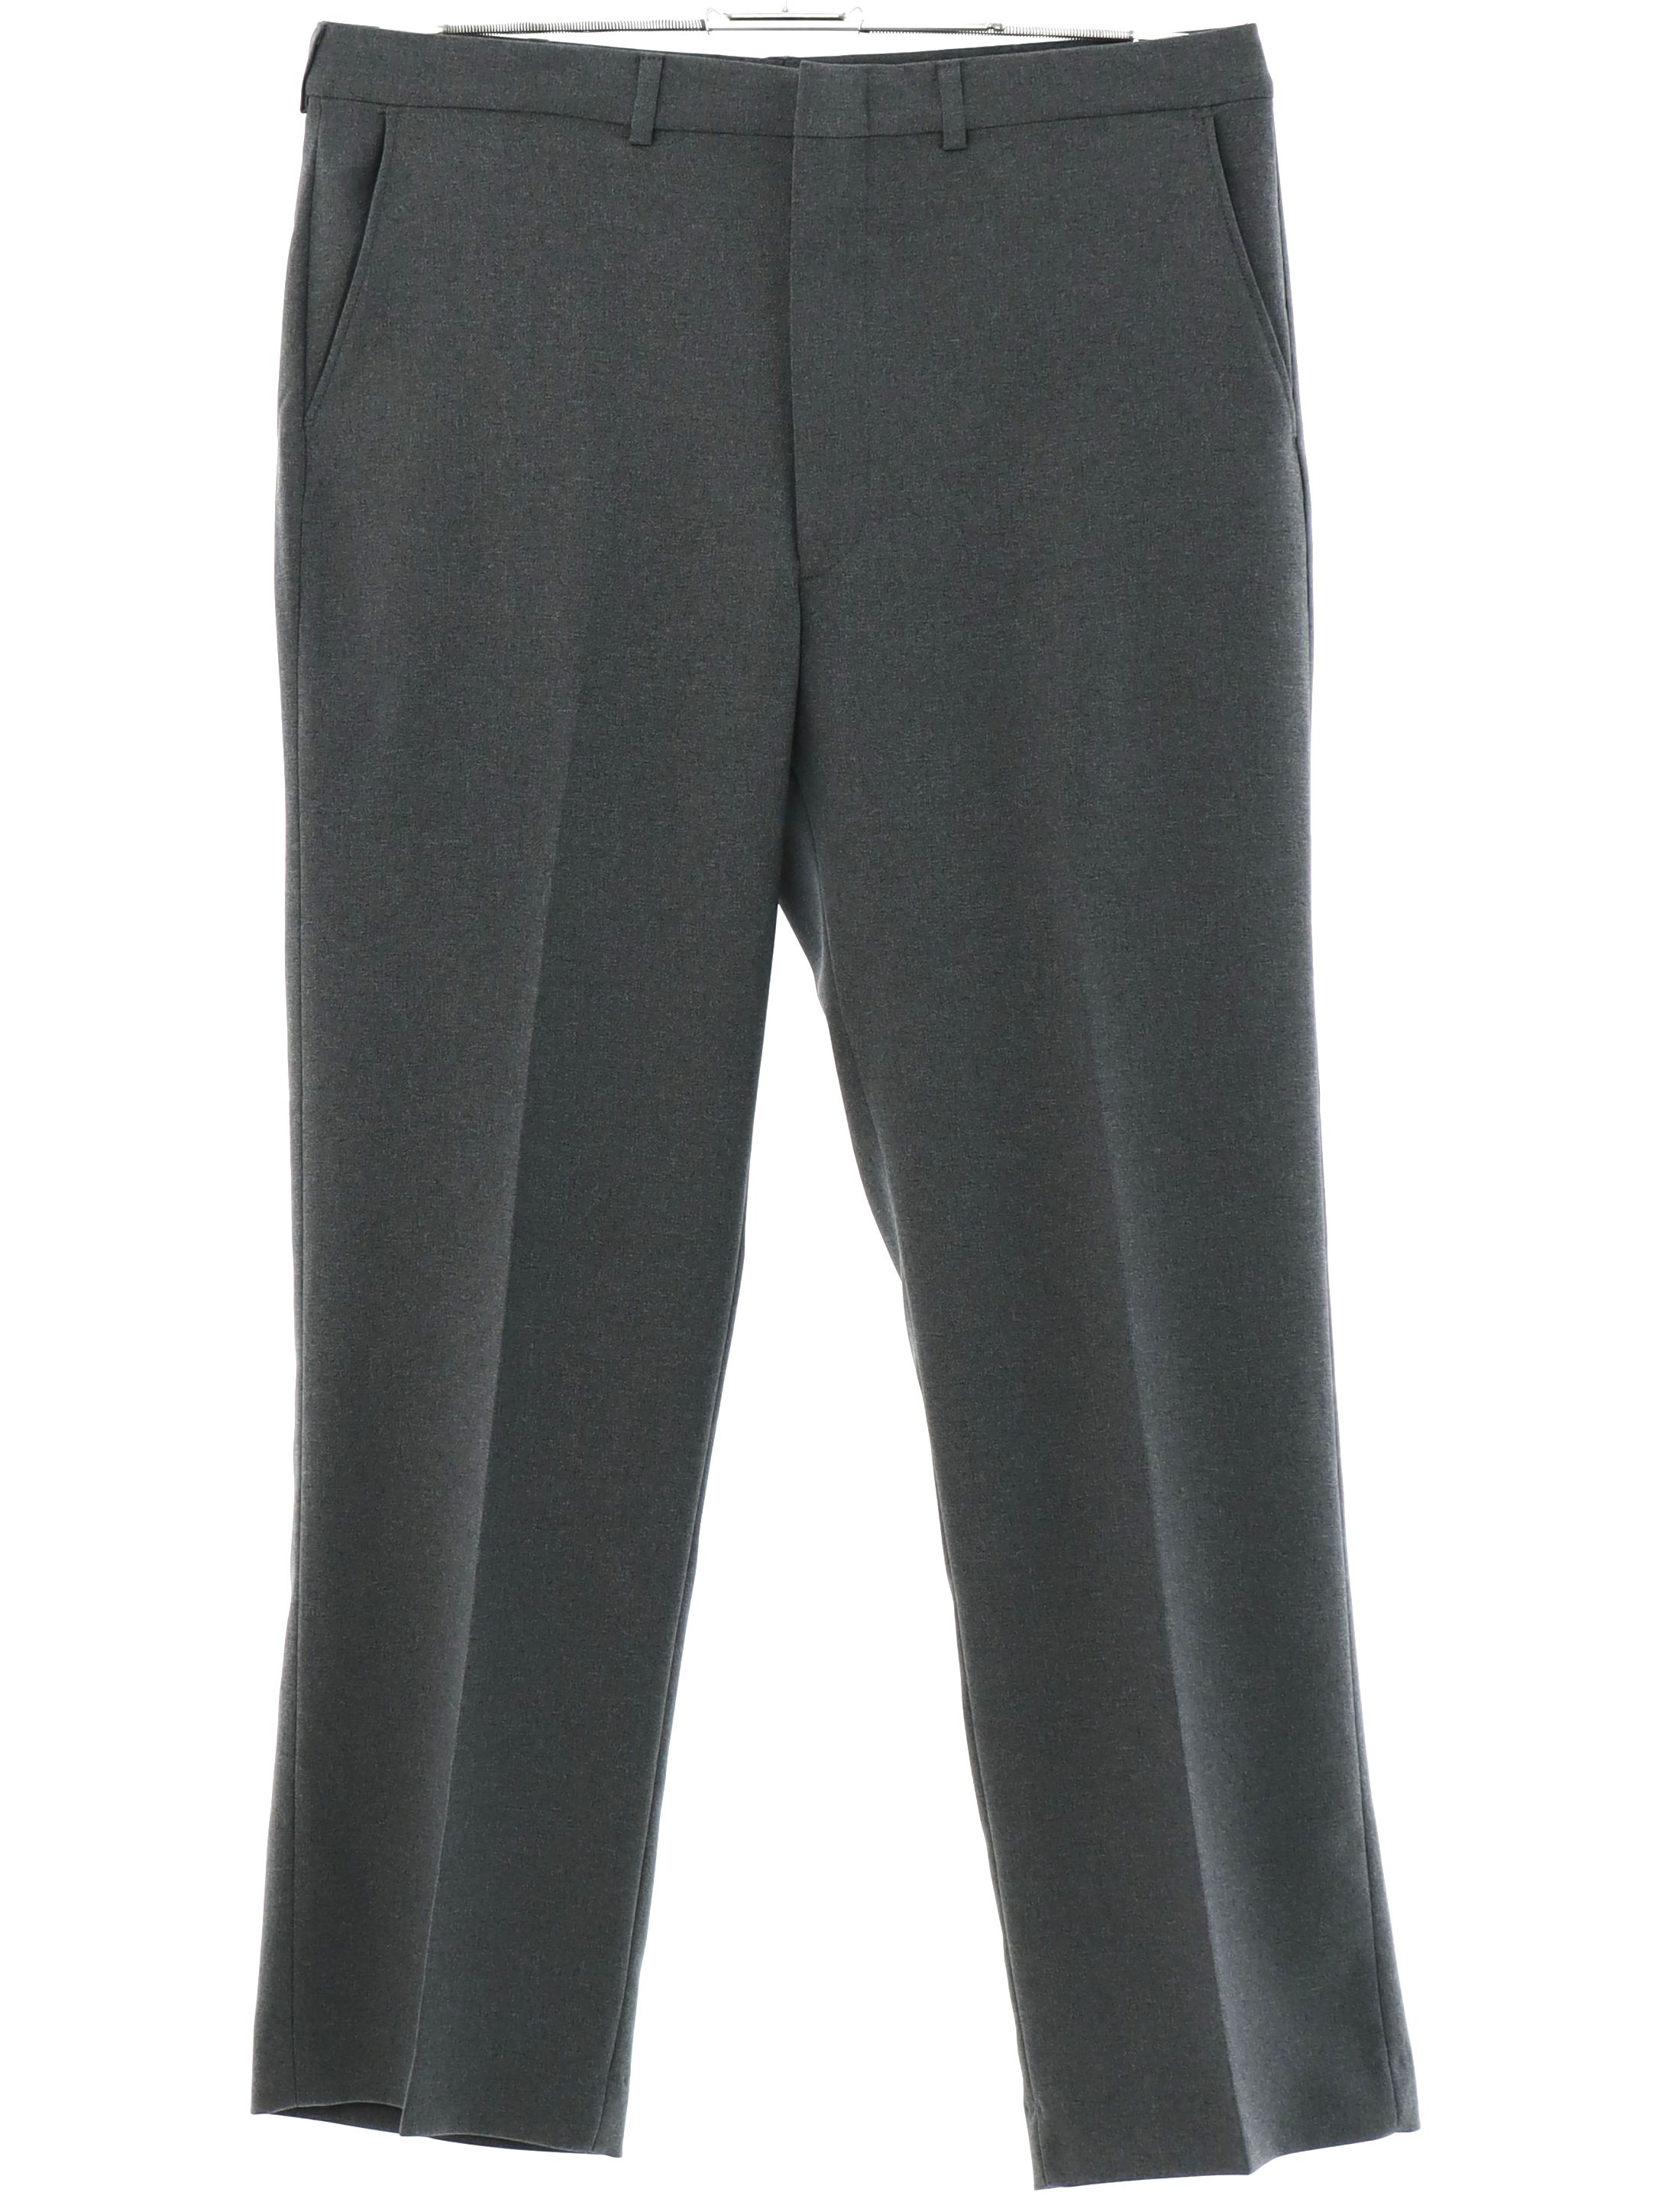 Eighties Vintage Pants: Early 80s -Flexslax- Mens heathered gray ...